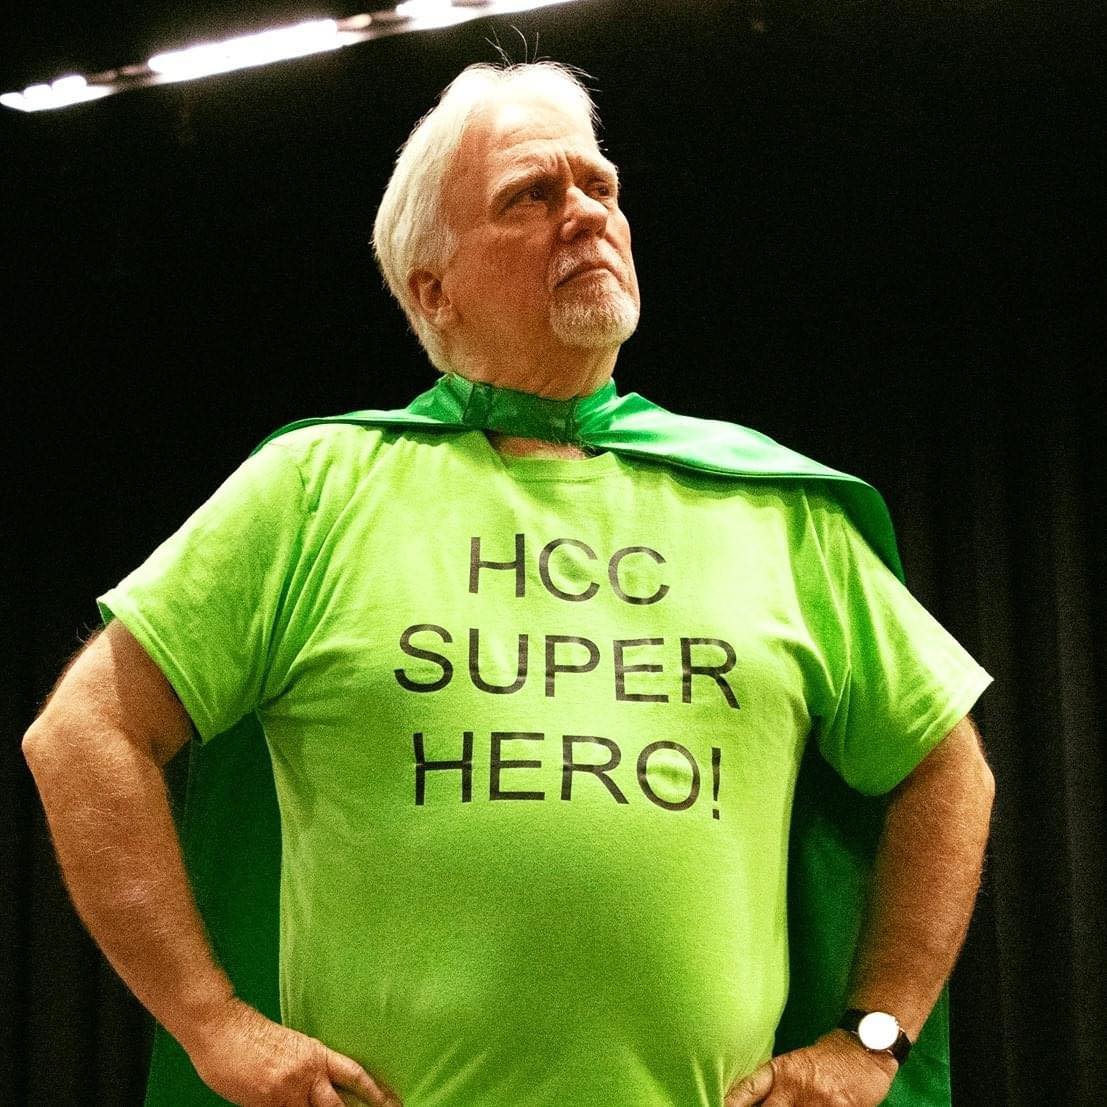 Mike Harsh - Superhero